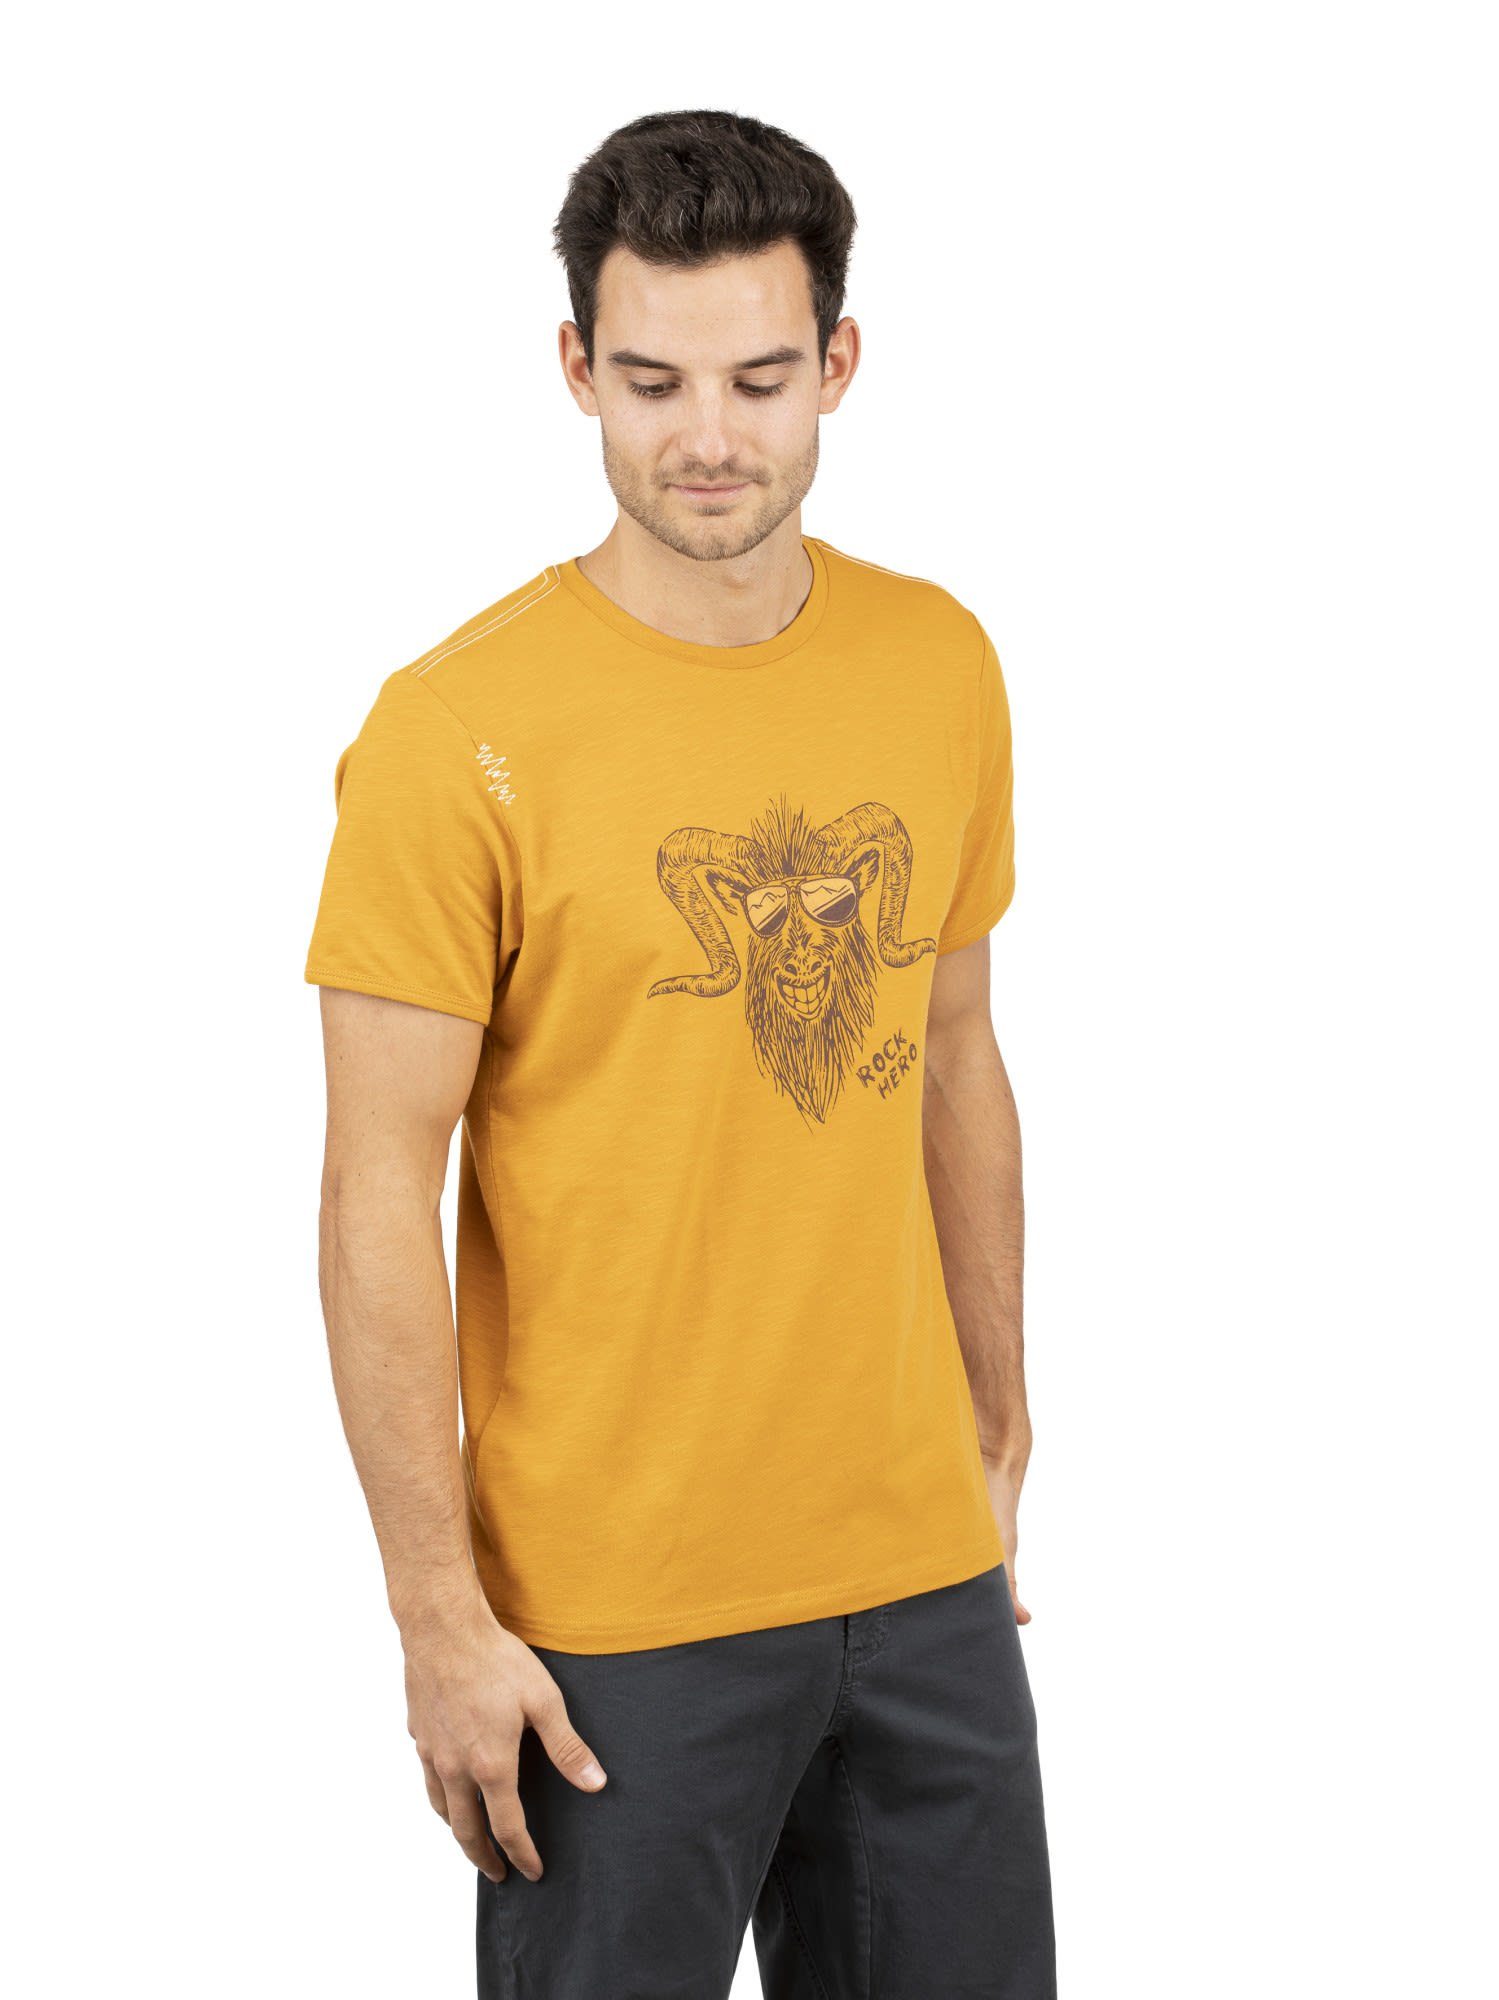 Mustard T-Shirt Chillaz Kurzarm-Shirt Herren Chillaz M Rock T-shirt Hero